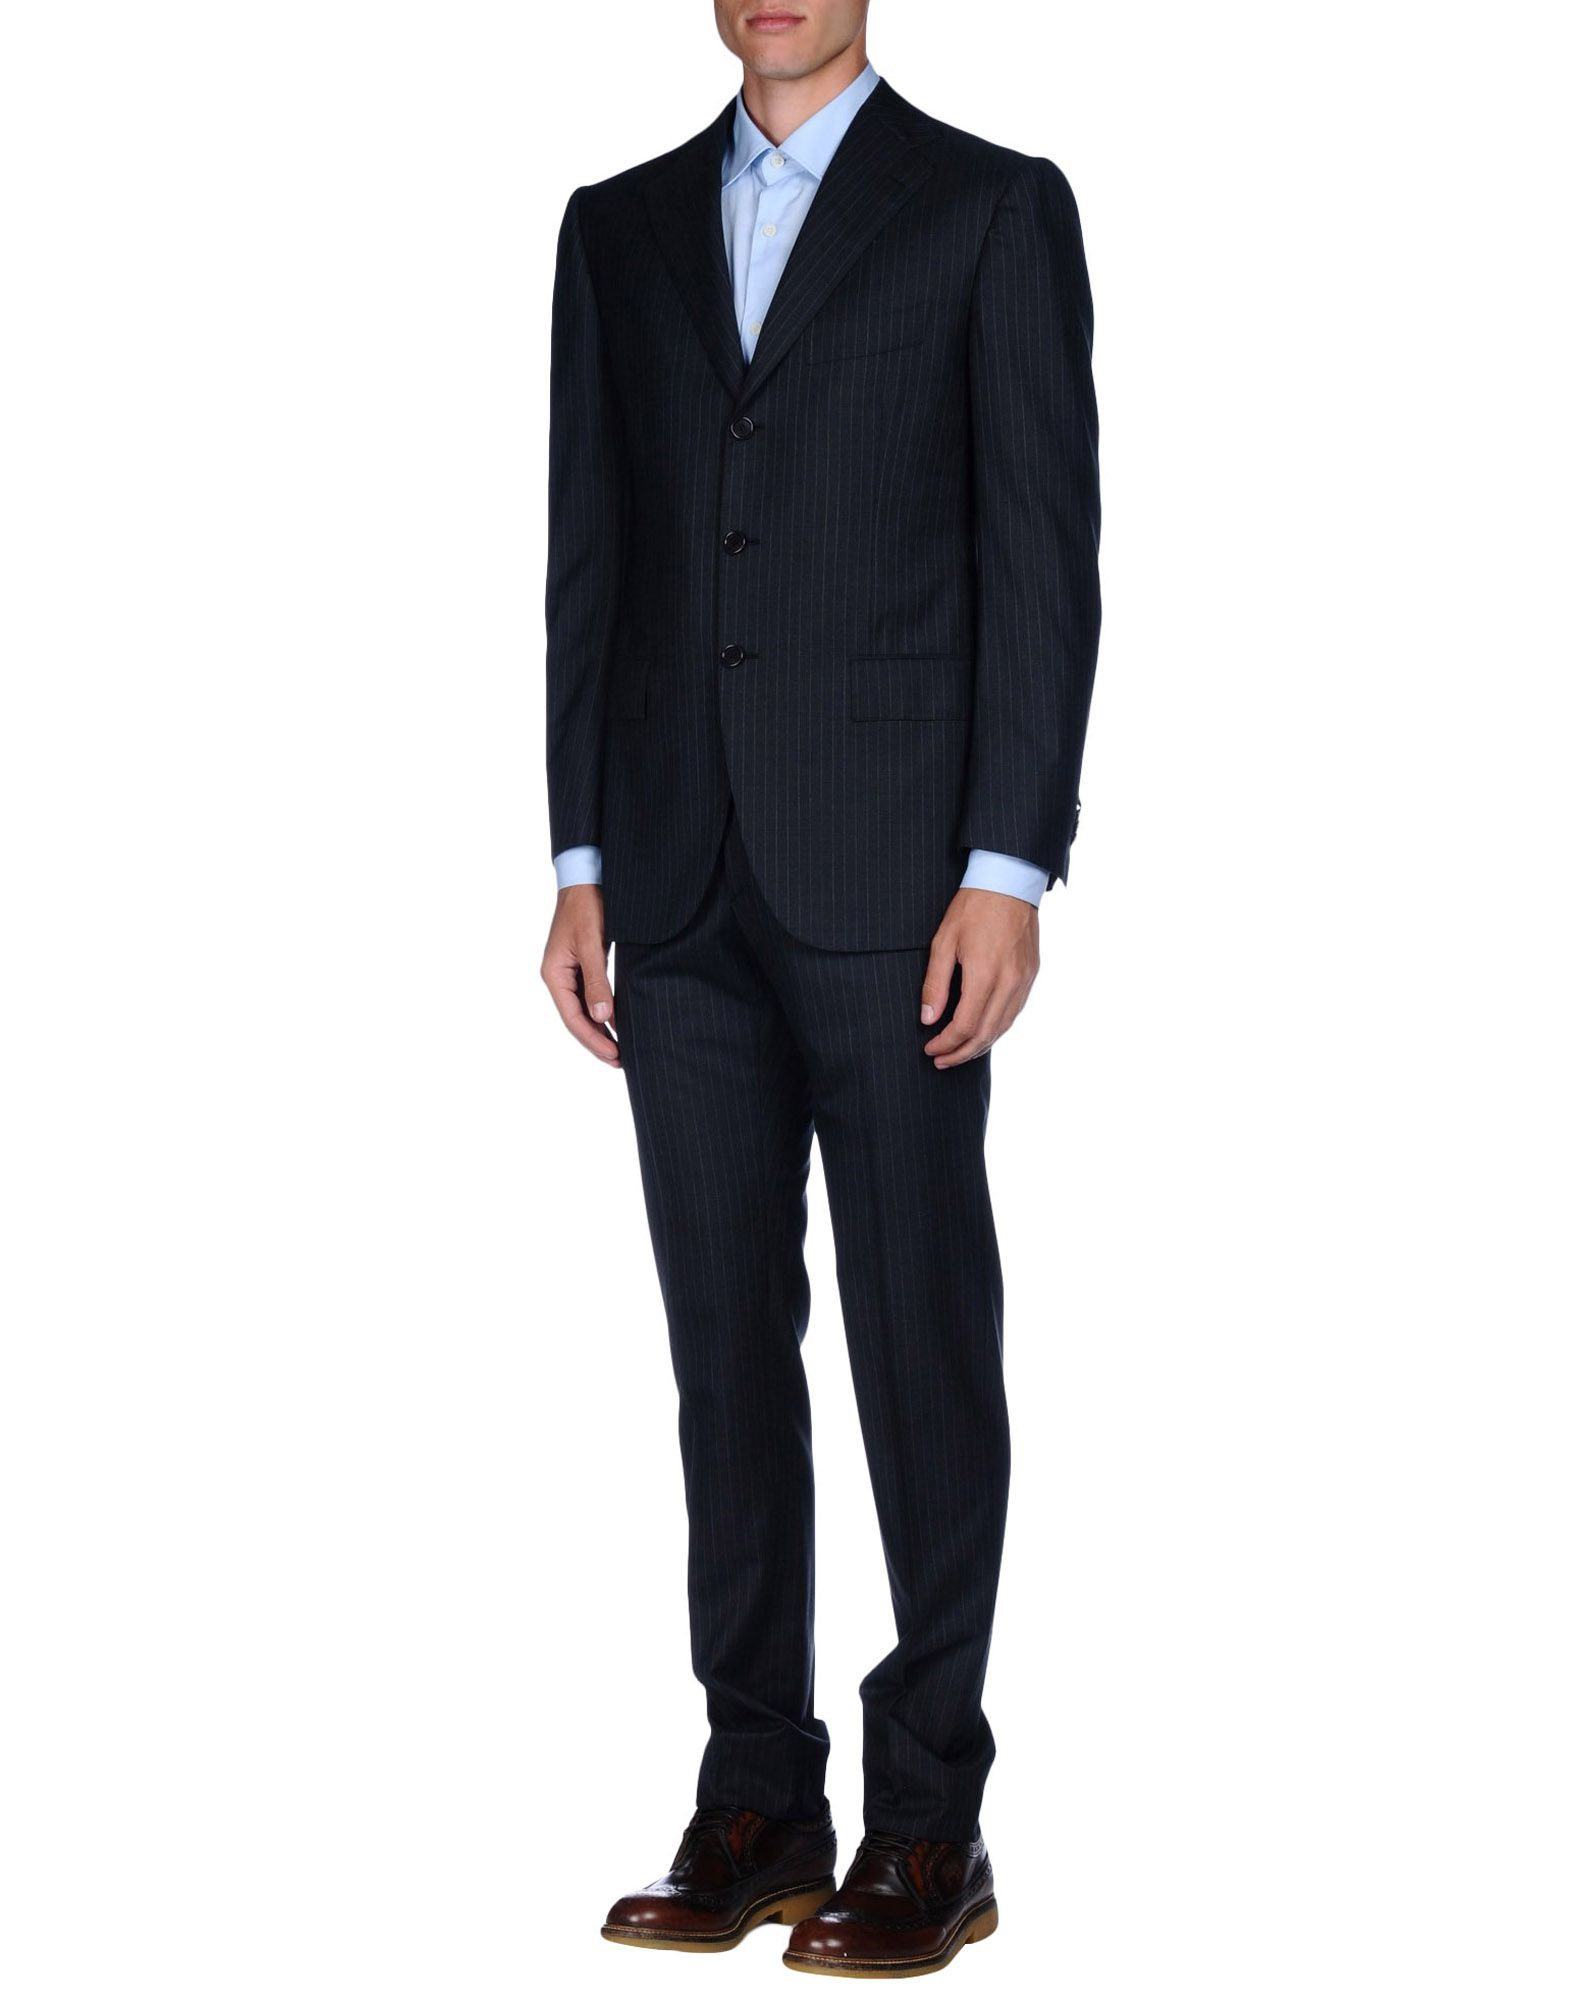 Lyst - Cesare Attolini Suit in Gray for Men